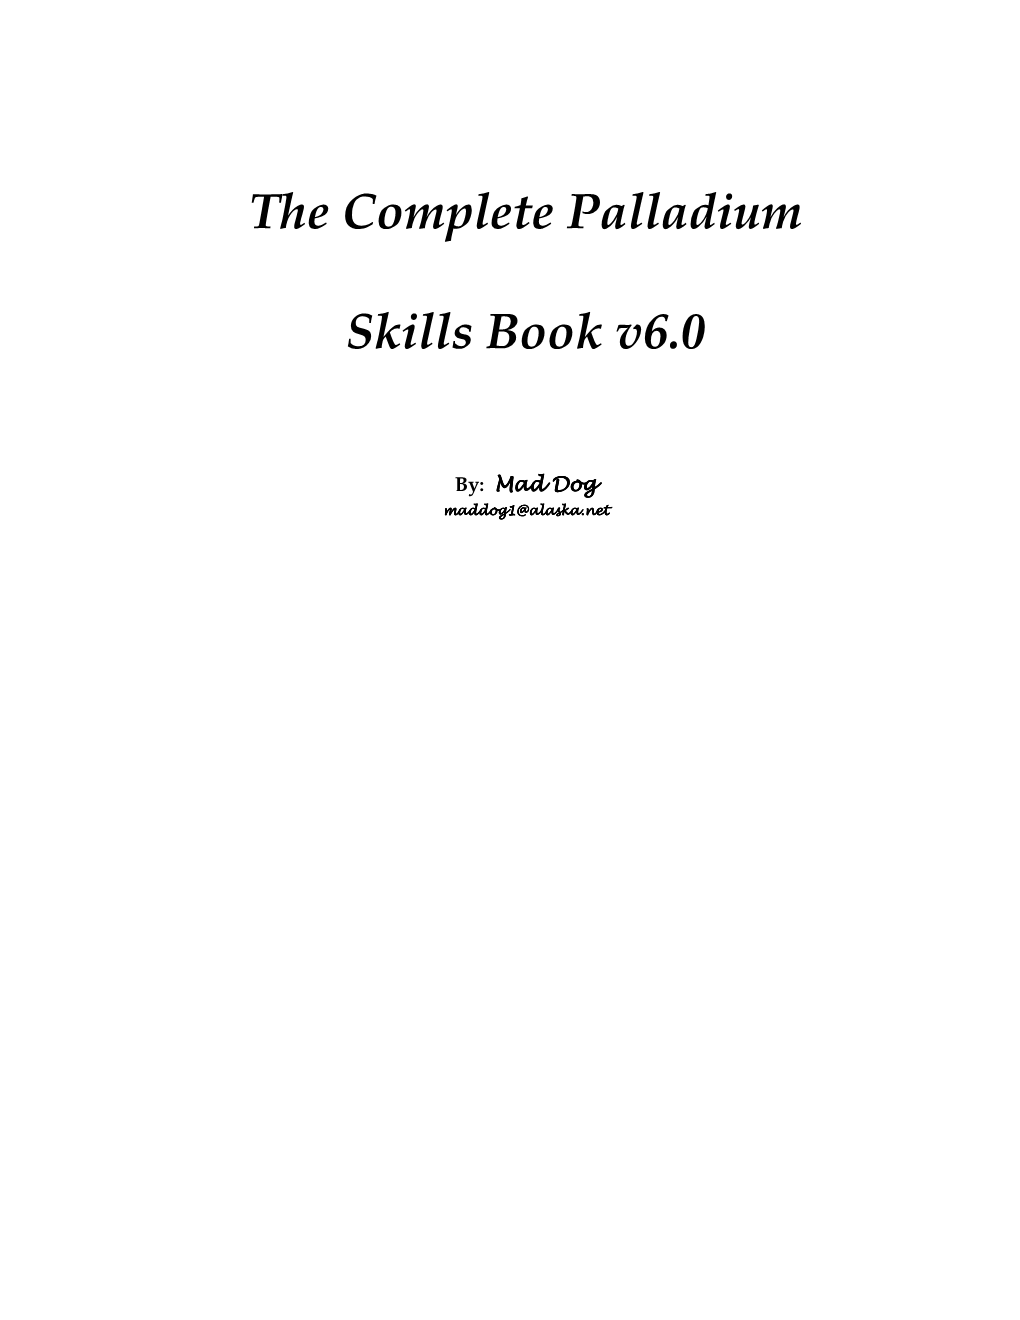 The Complete Palladium Skills Book V6.0